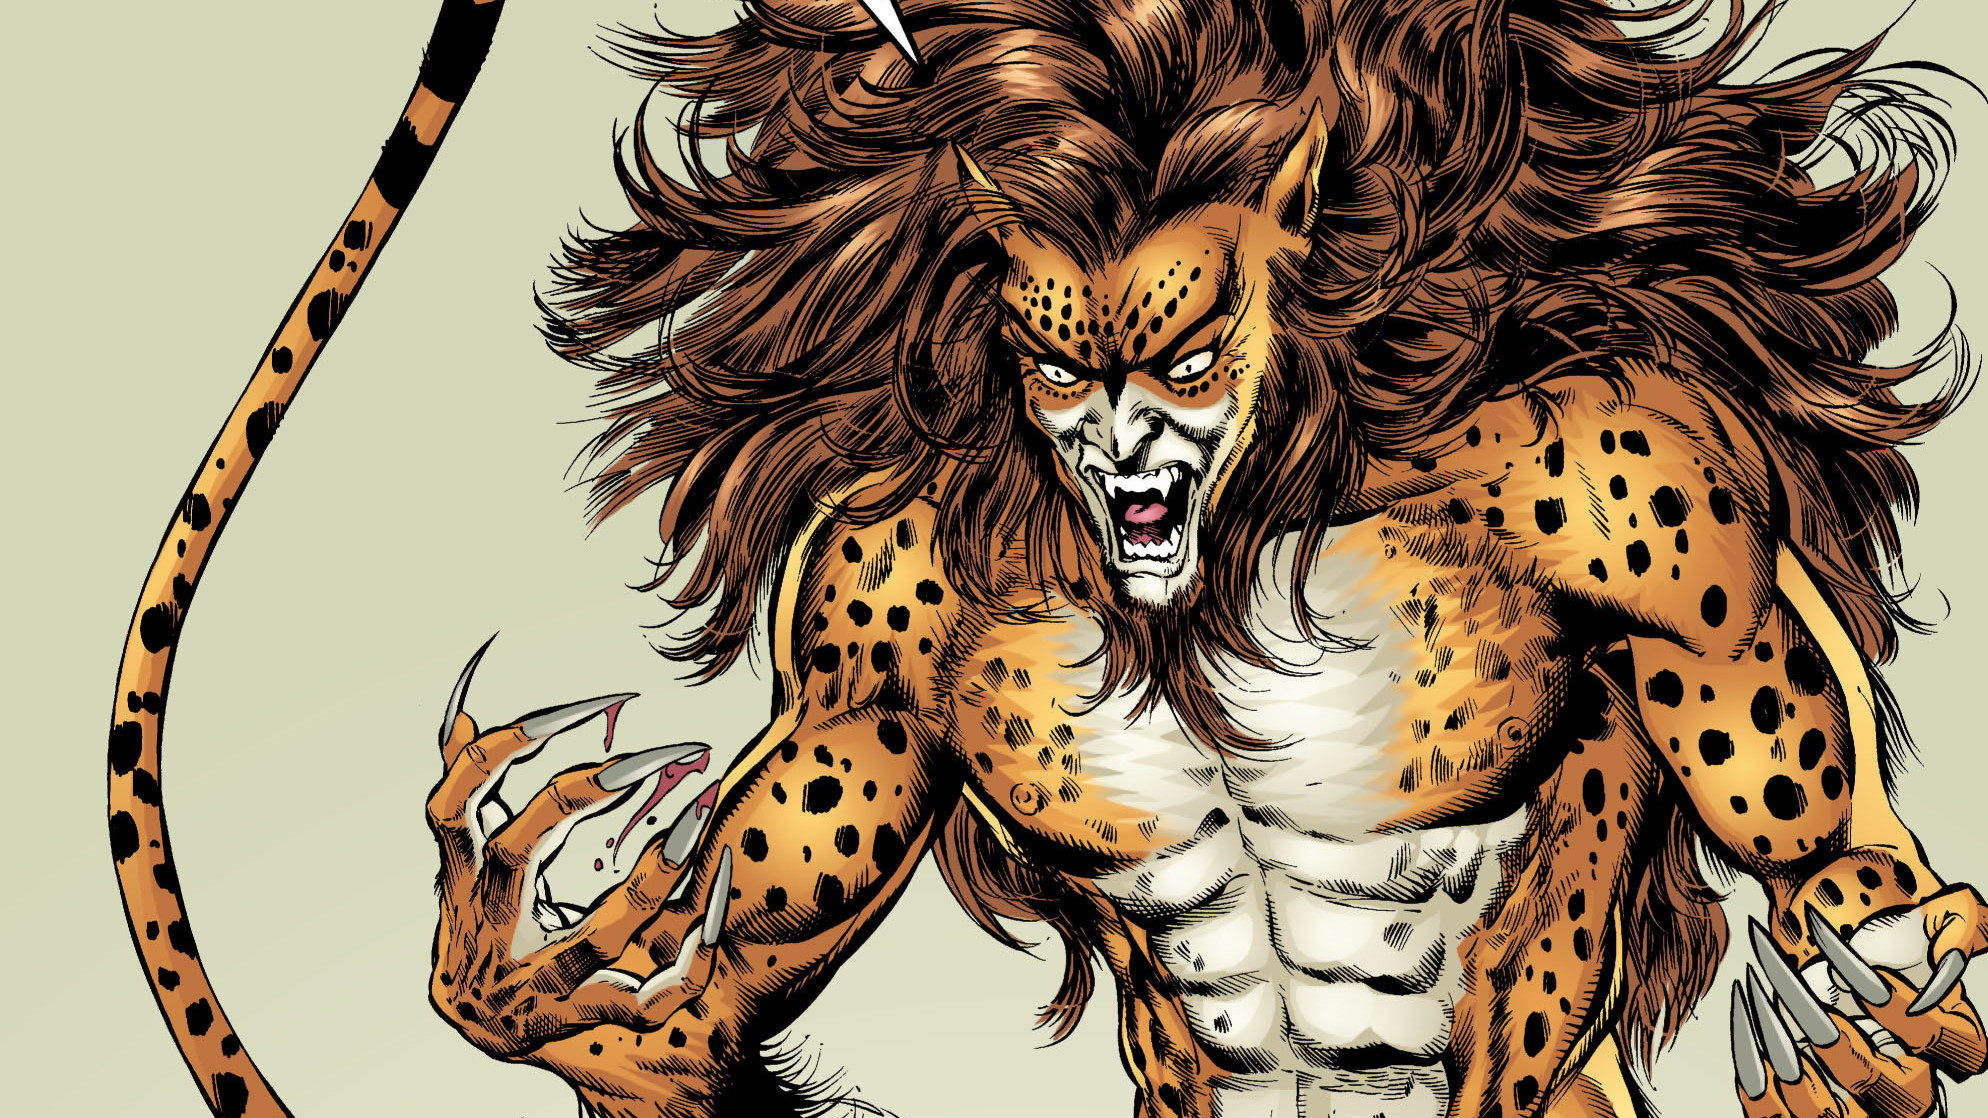 So yeah, this is what Sebastian looks like as Cheetah. (Image: DC Comics)